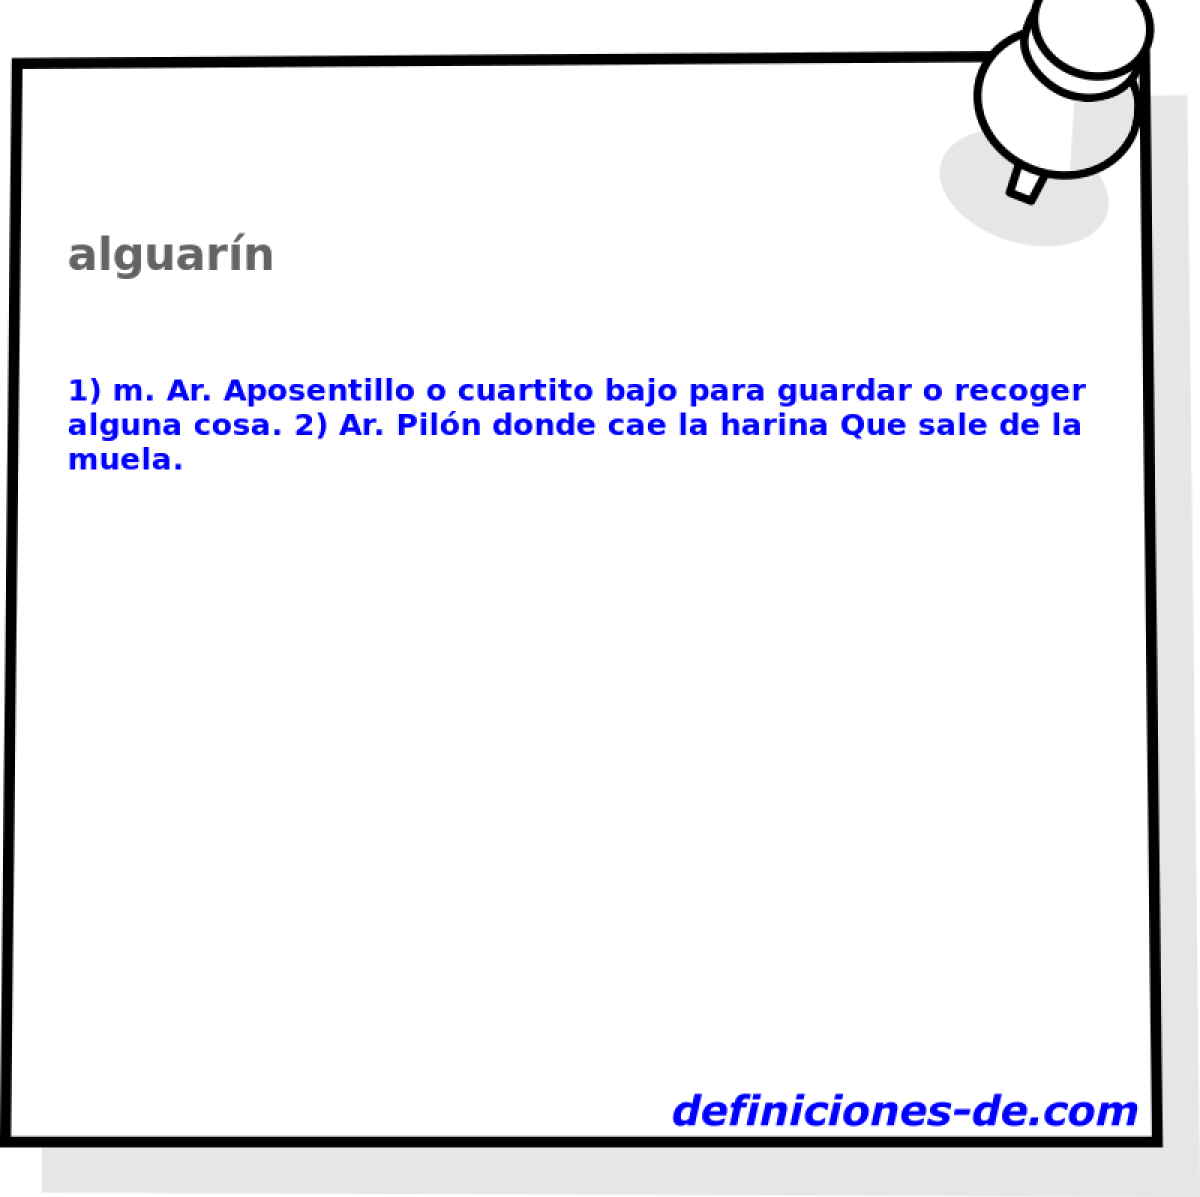 alguarn 